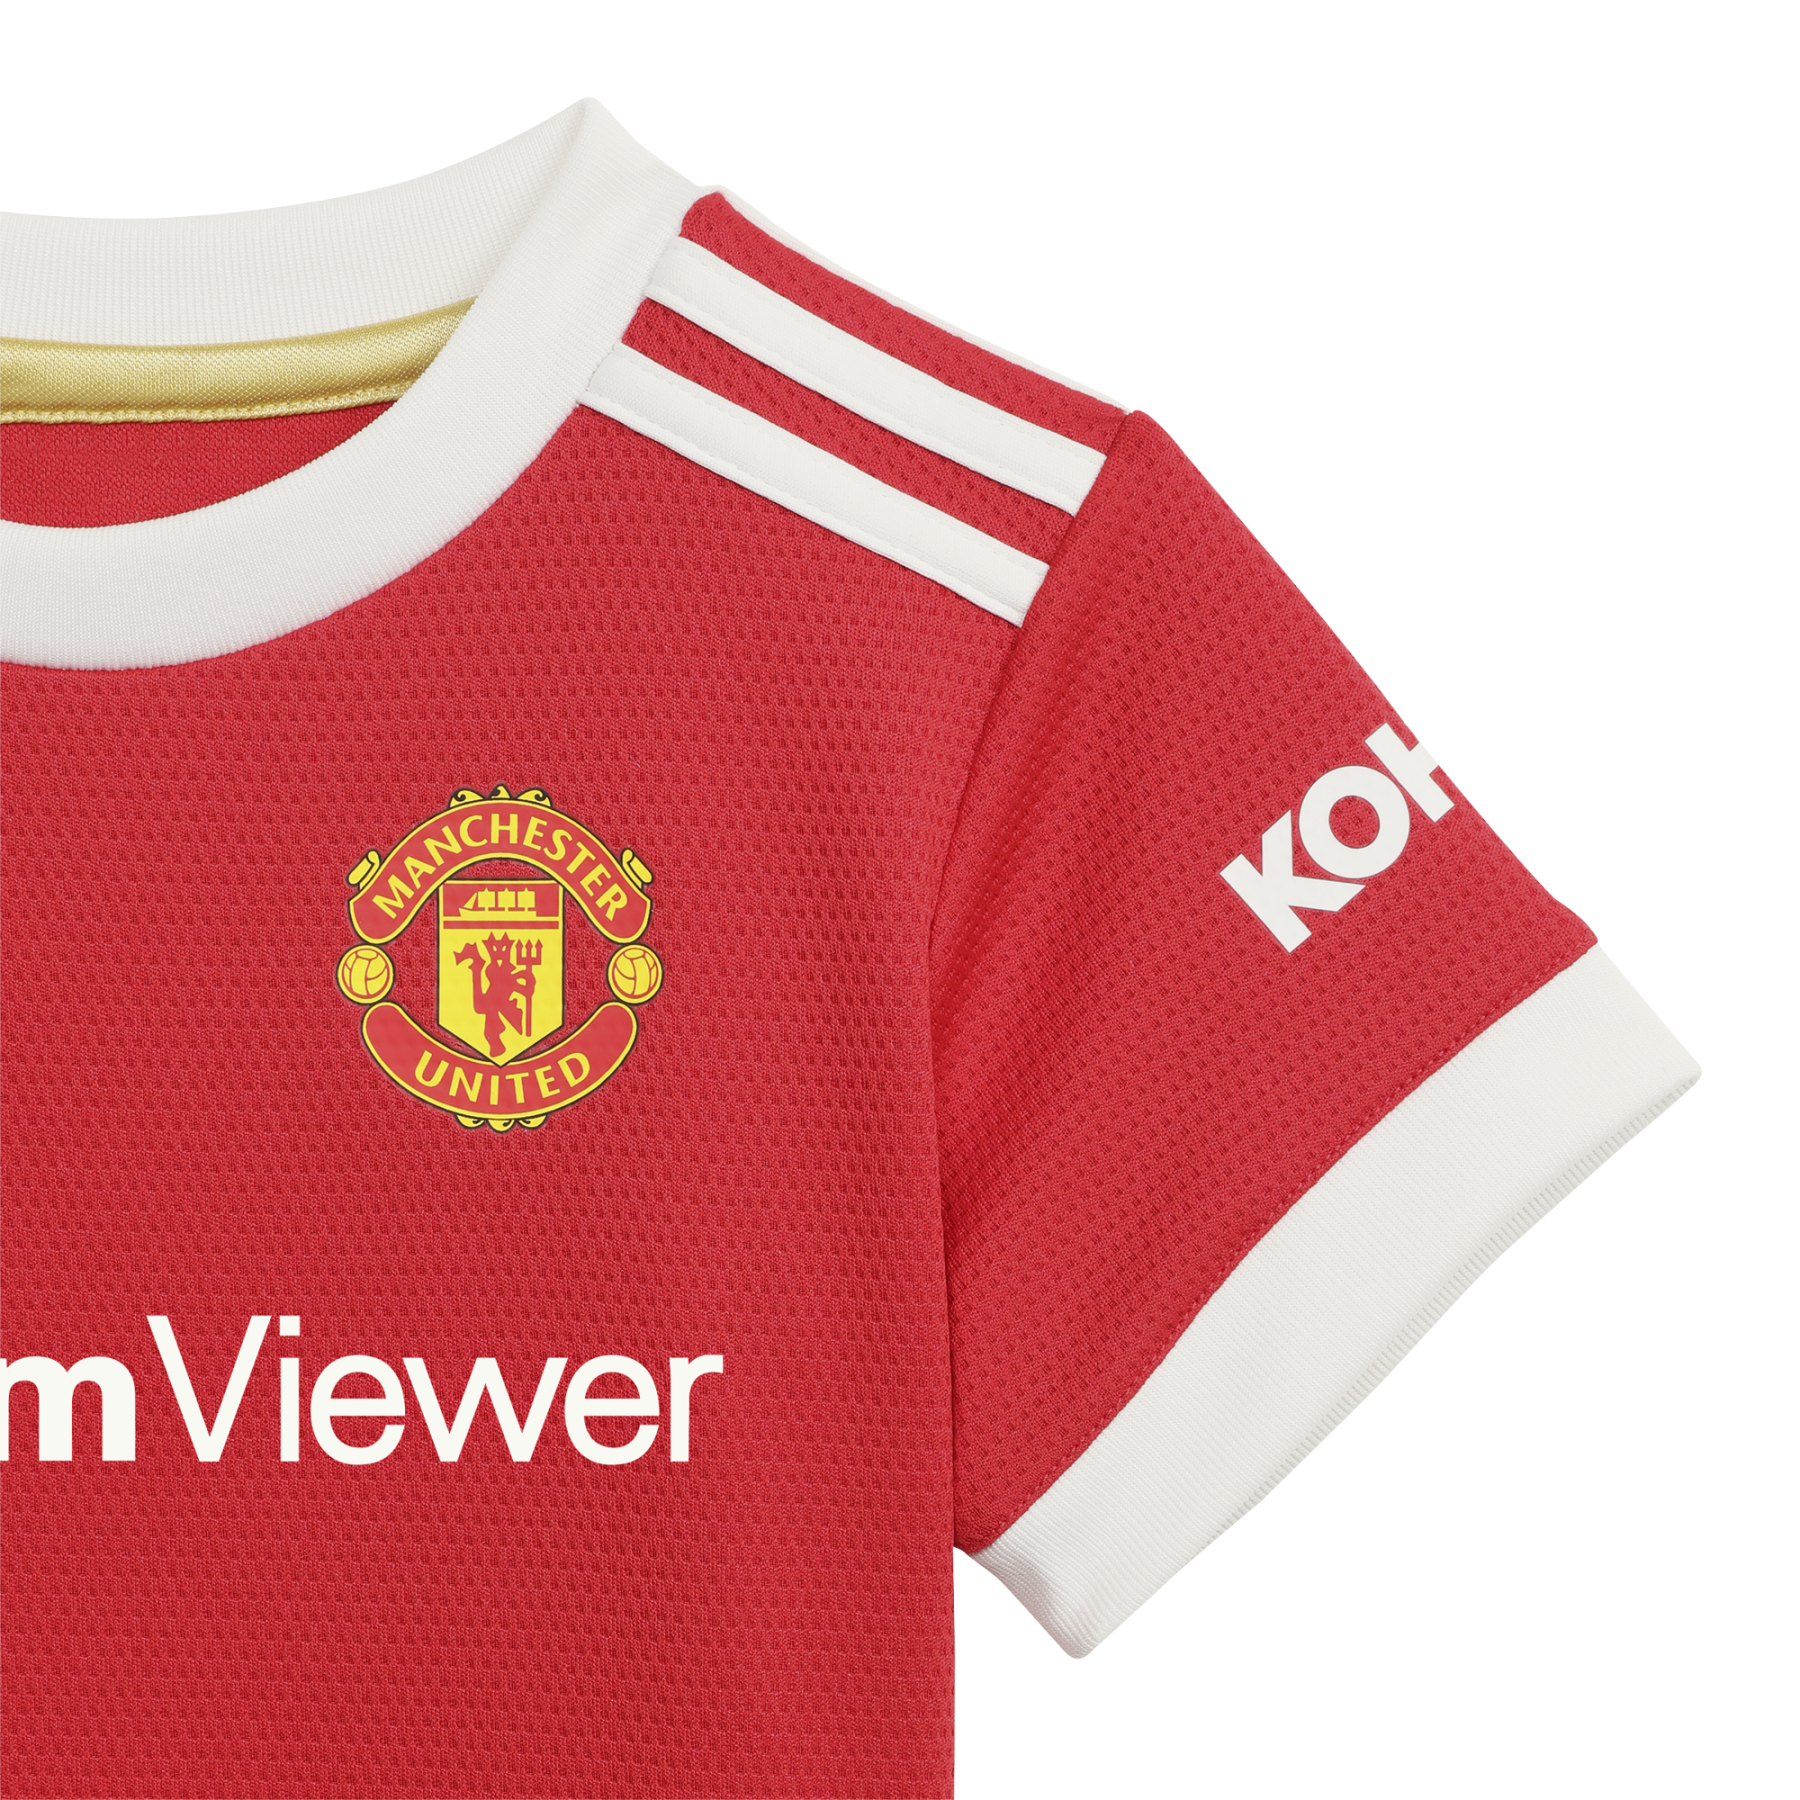 Mini-kit para niños en casa Manchester United 2021/22